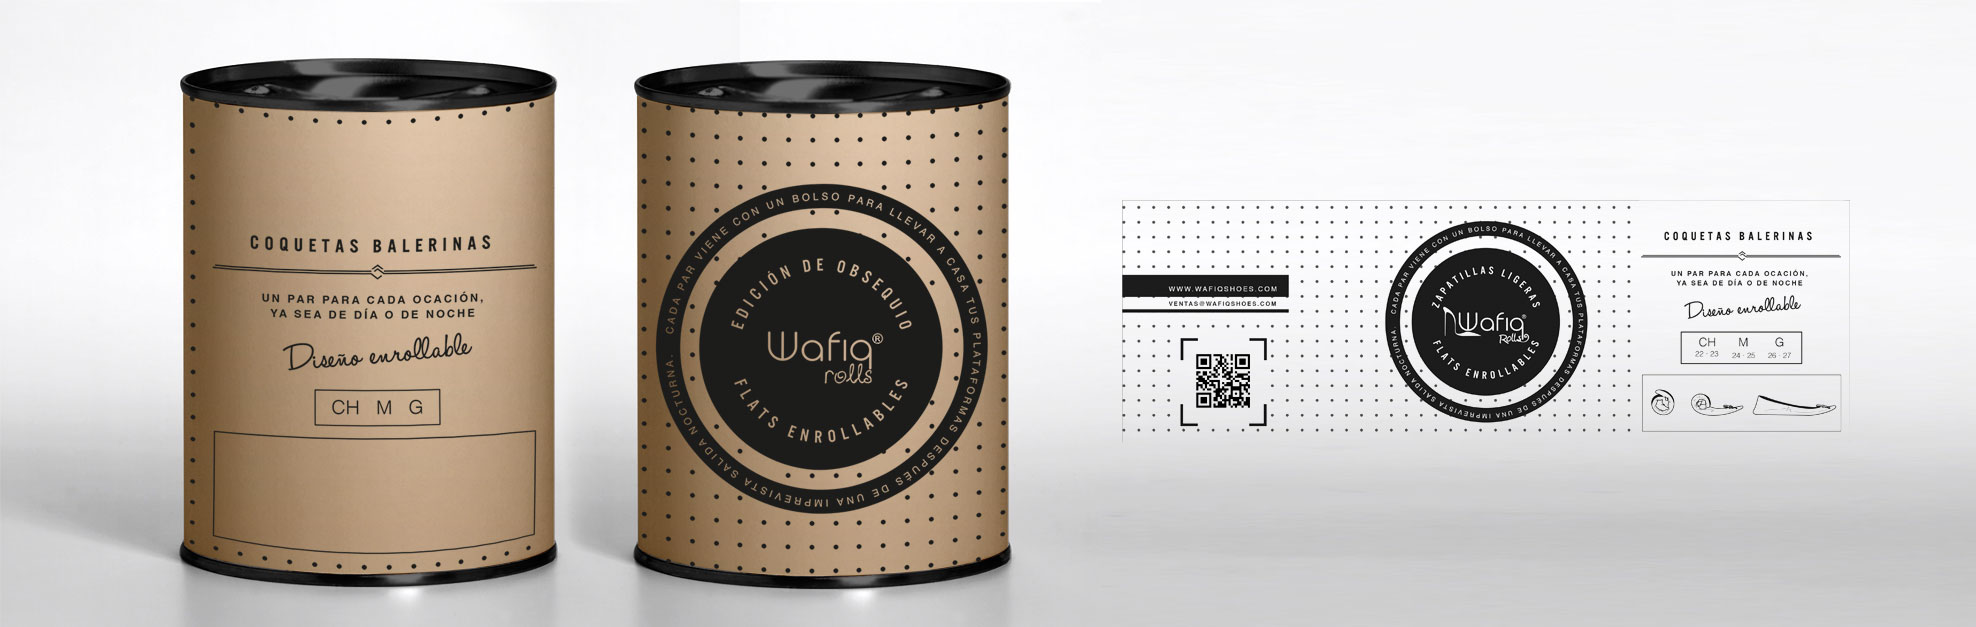 Packaging wafiq rolls